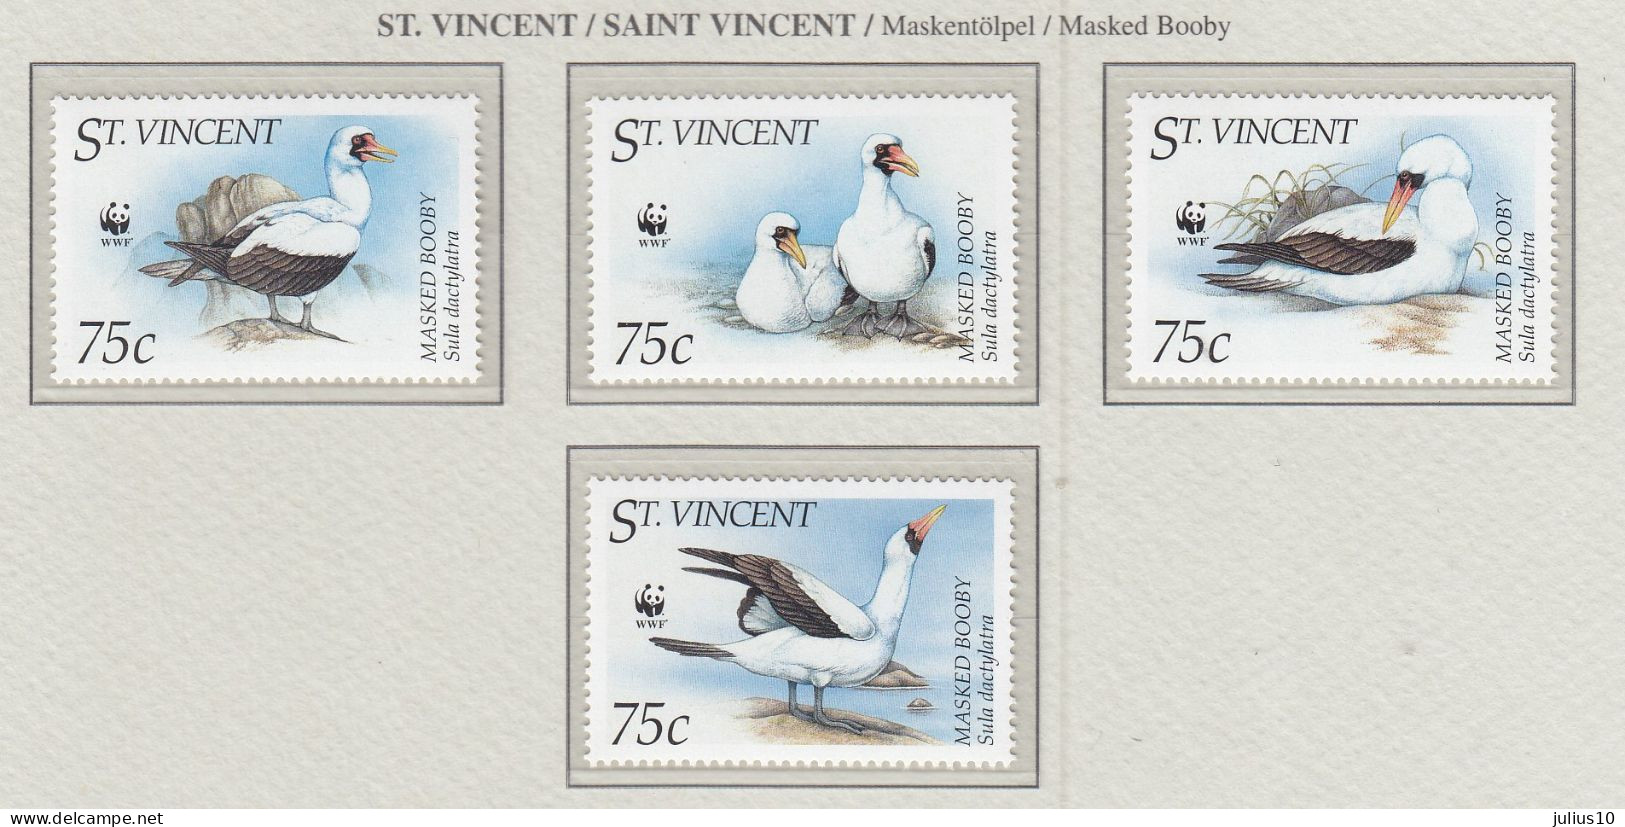 St. VINCENT 1995 WWF Masked Booby Birds Mi 3073 - 3076 MNH(**) Fauna 534 - Albatros